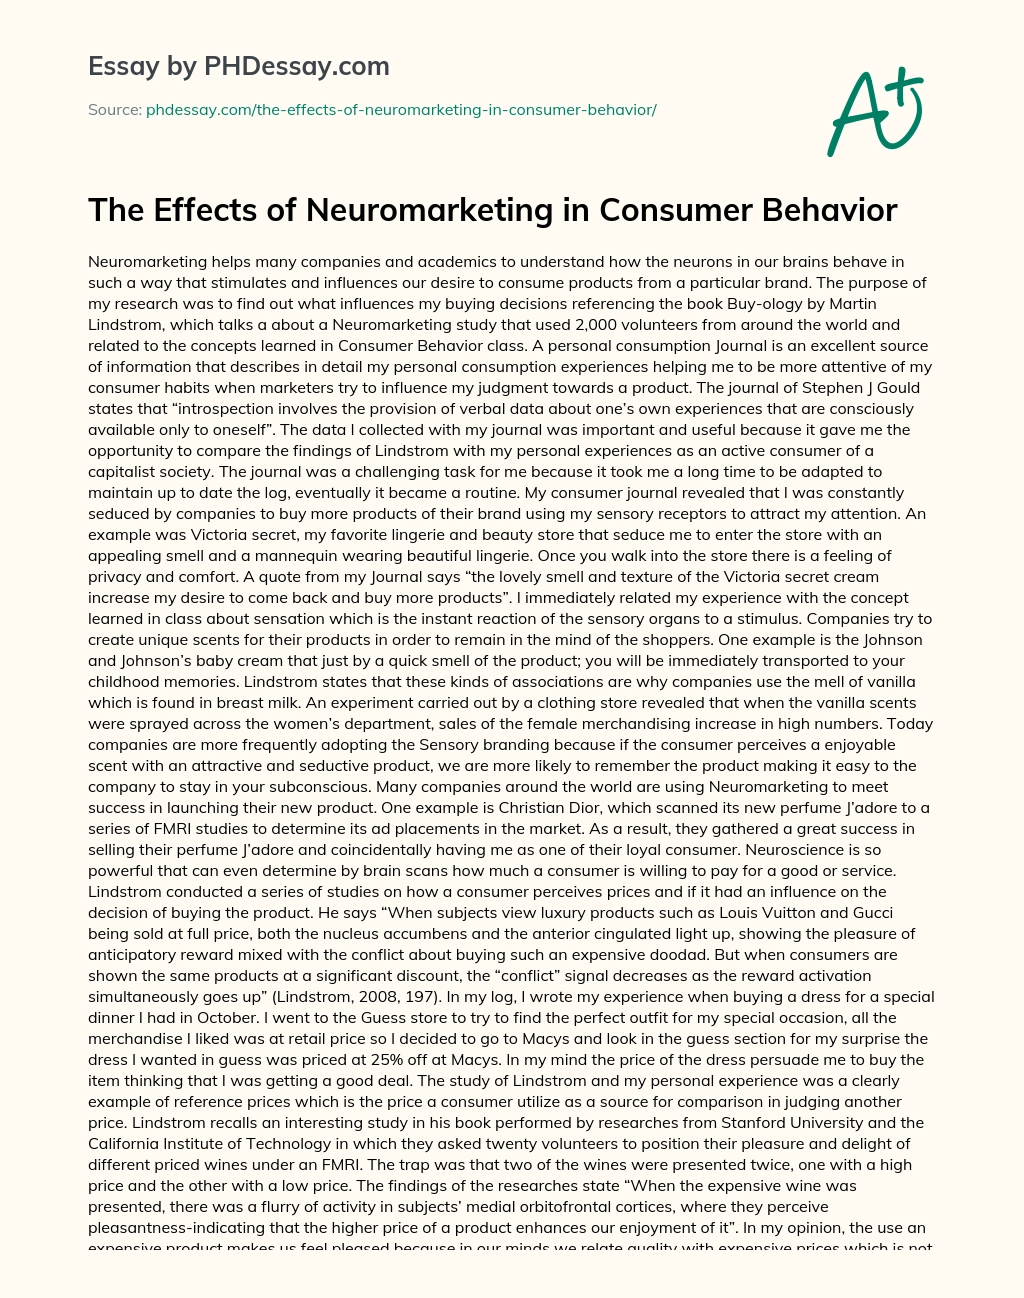 The Effects of Neuromarketing in Consumer Behavior essay